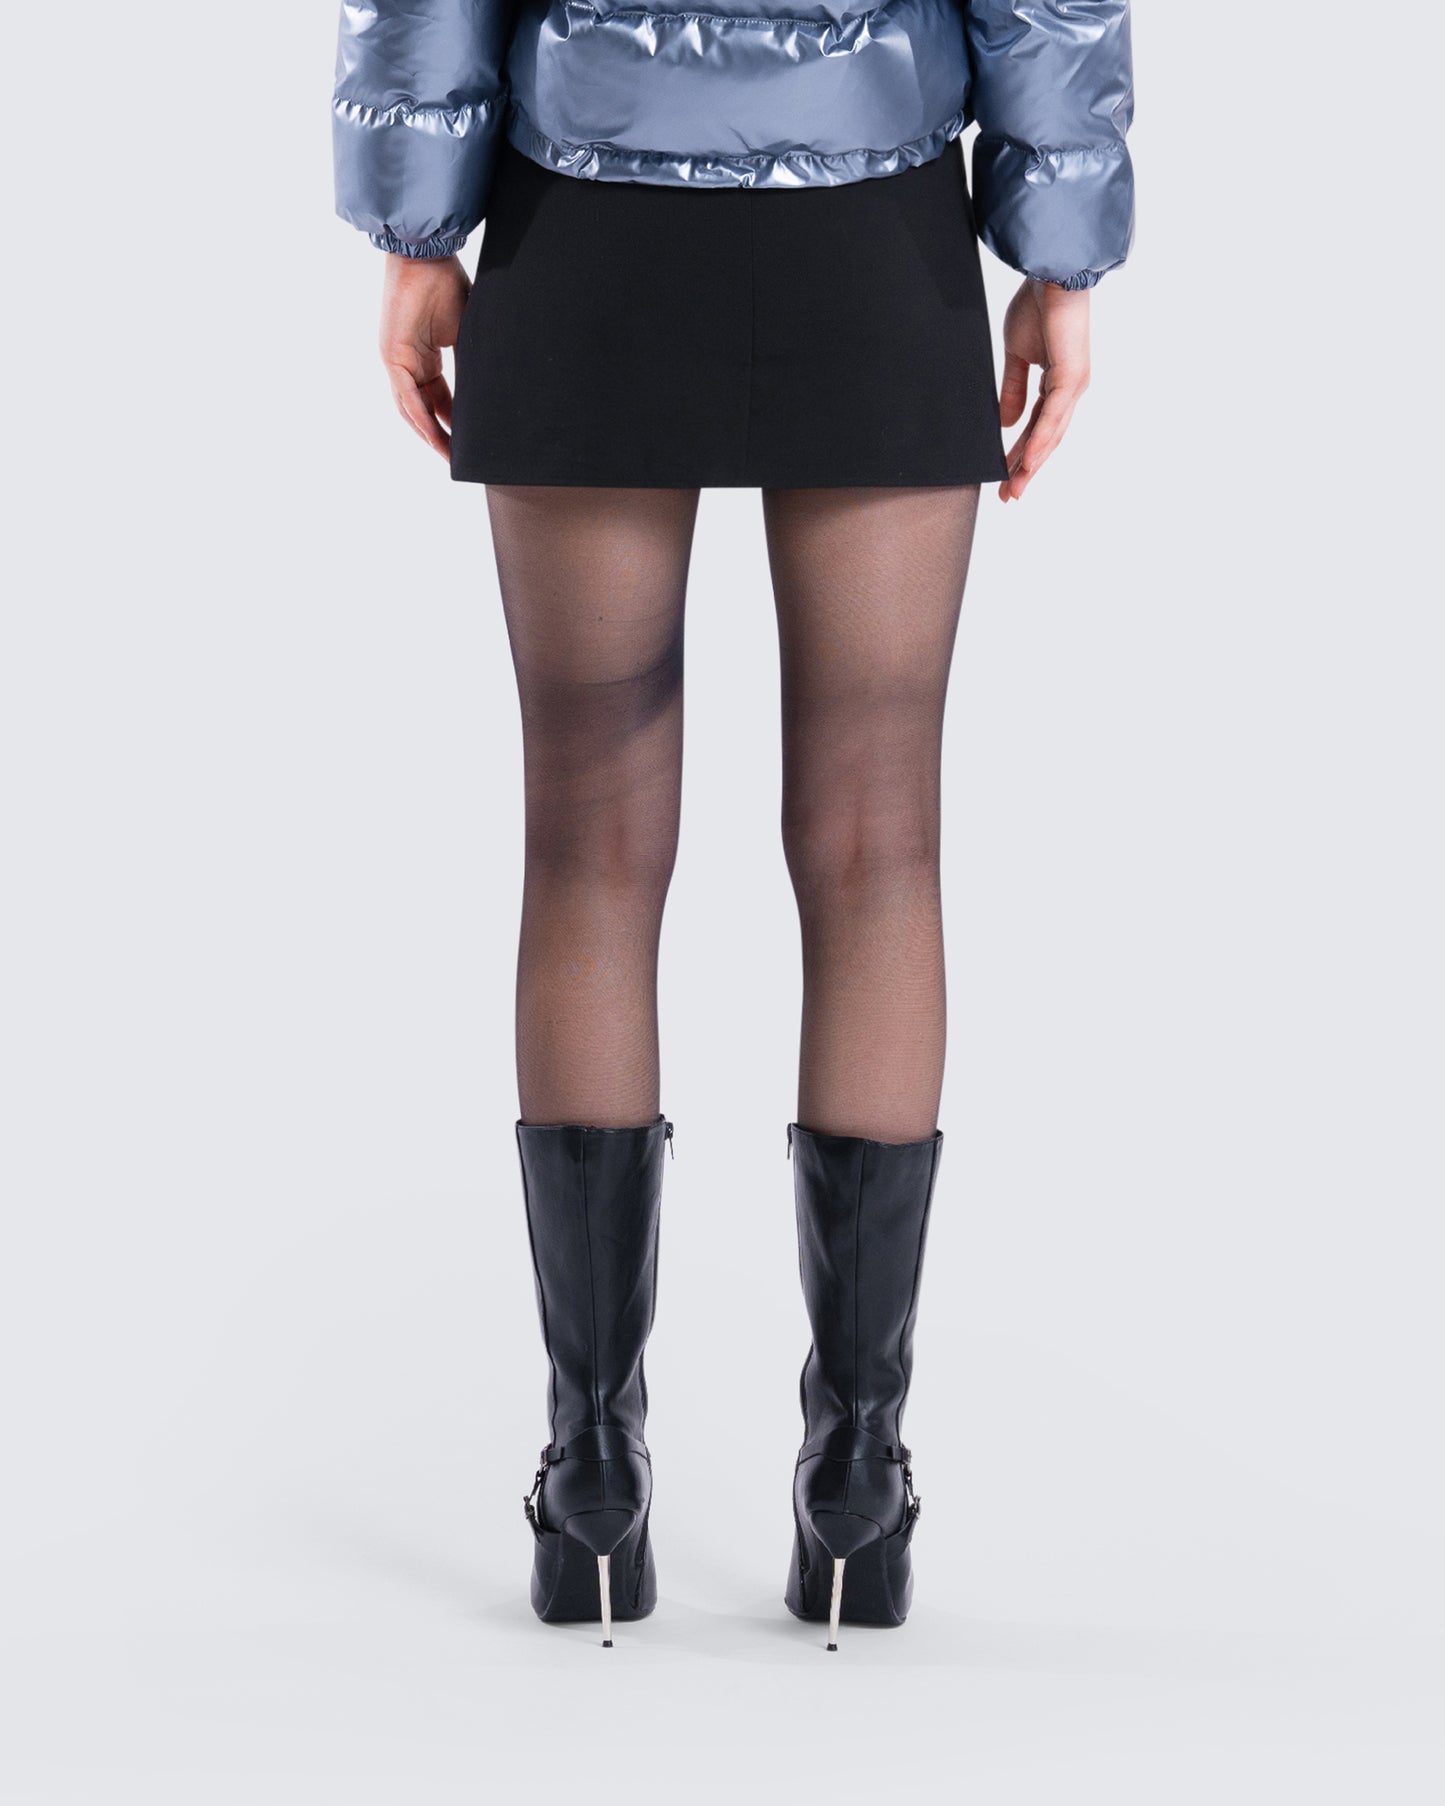 Kimmy Black Mini Skirt